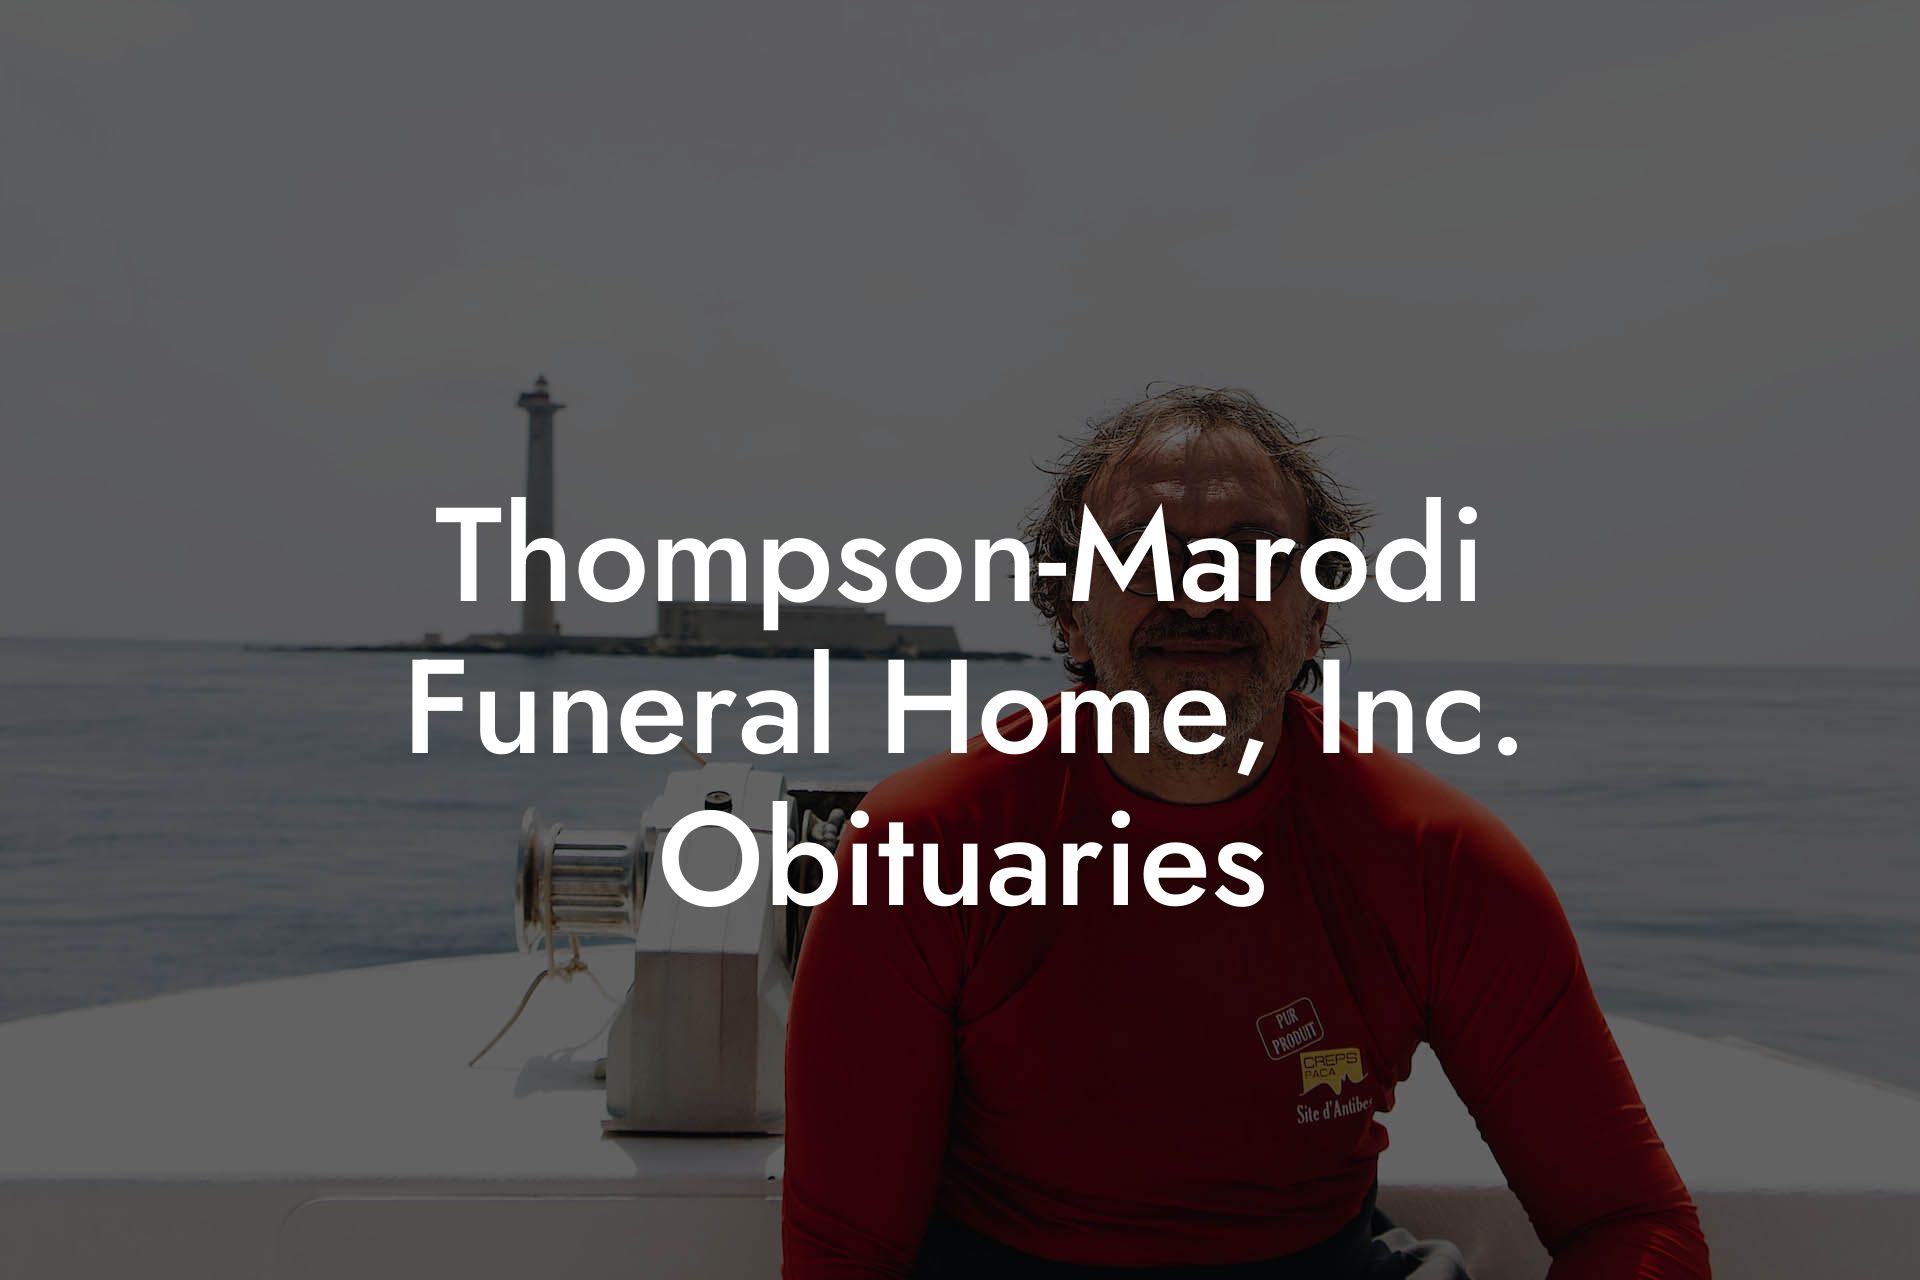 Thompson-Marodi Funeral Home, Inc. Obituaries